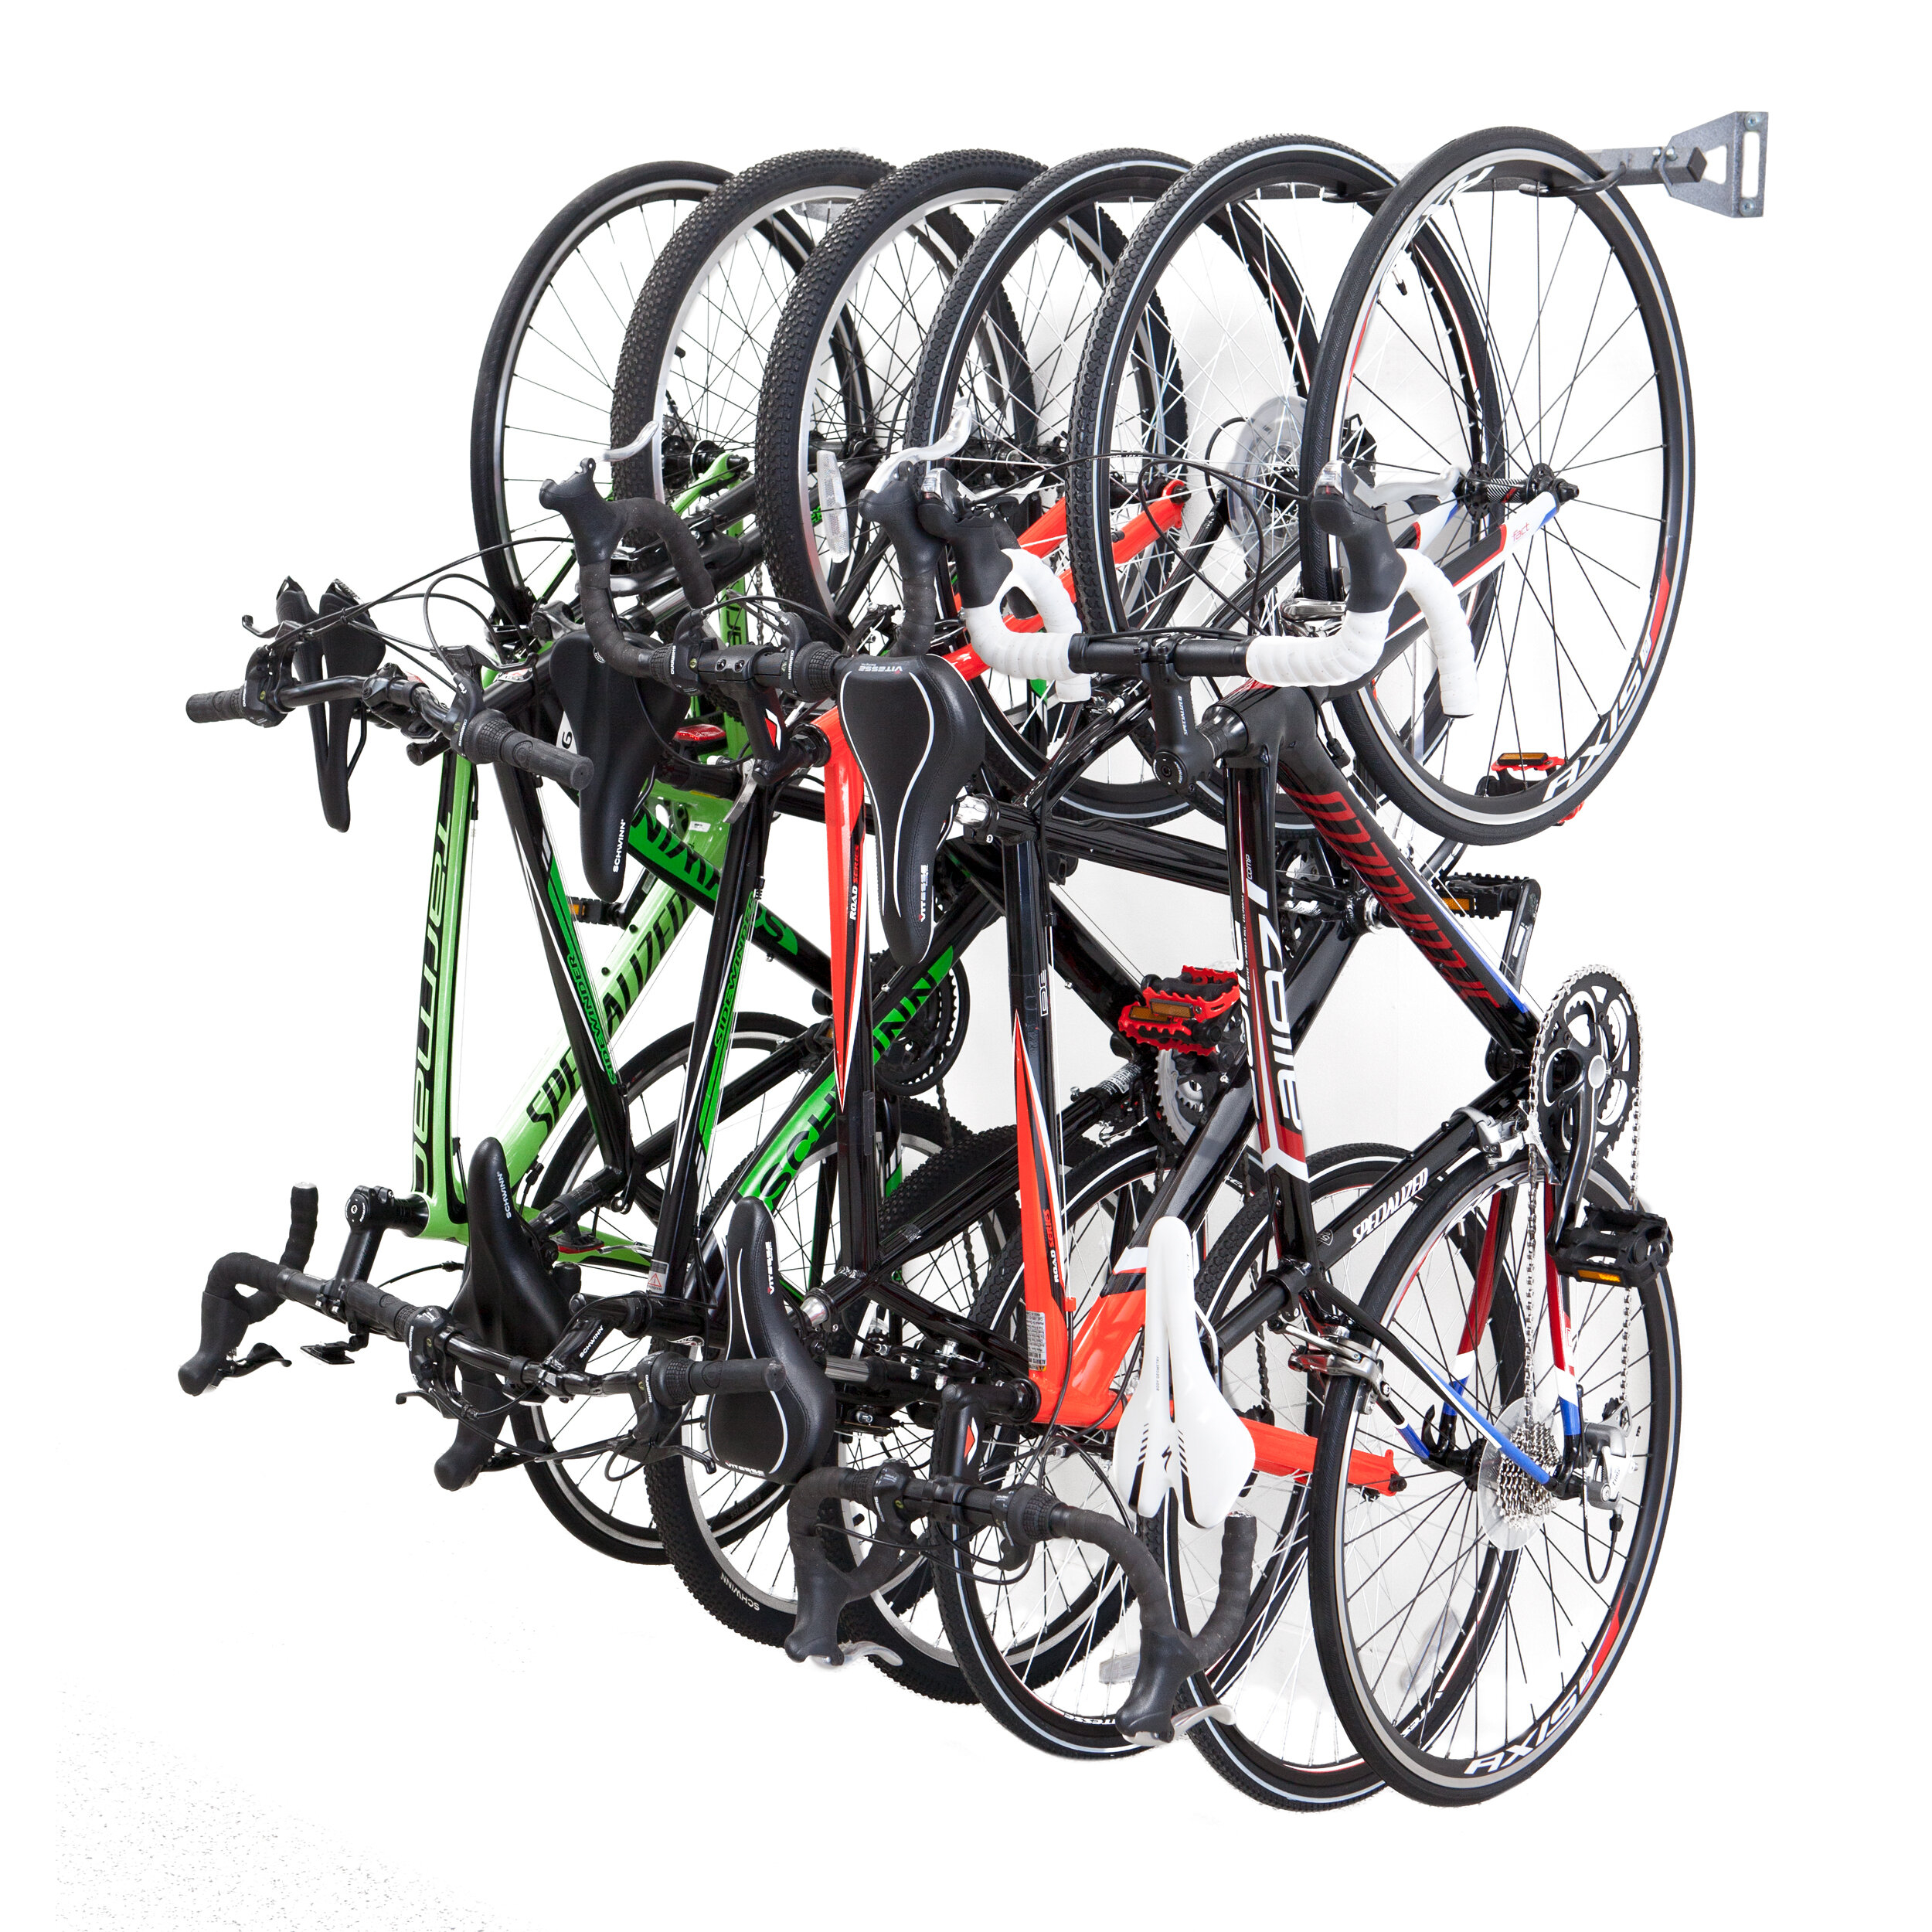 Save Space Anti Slip Wall Hanging Universal Bicycle Rack for Garage Shed Walls Dyda6 Wall Mount Vertical Bike Hanger 